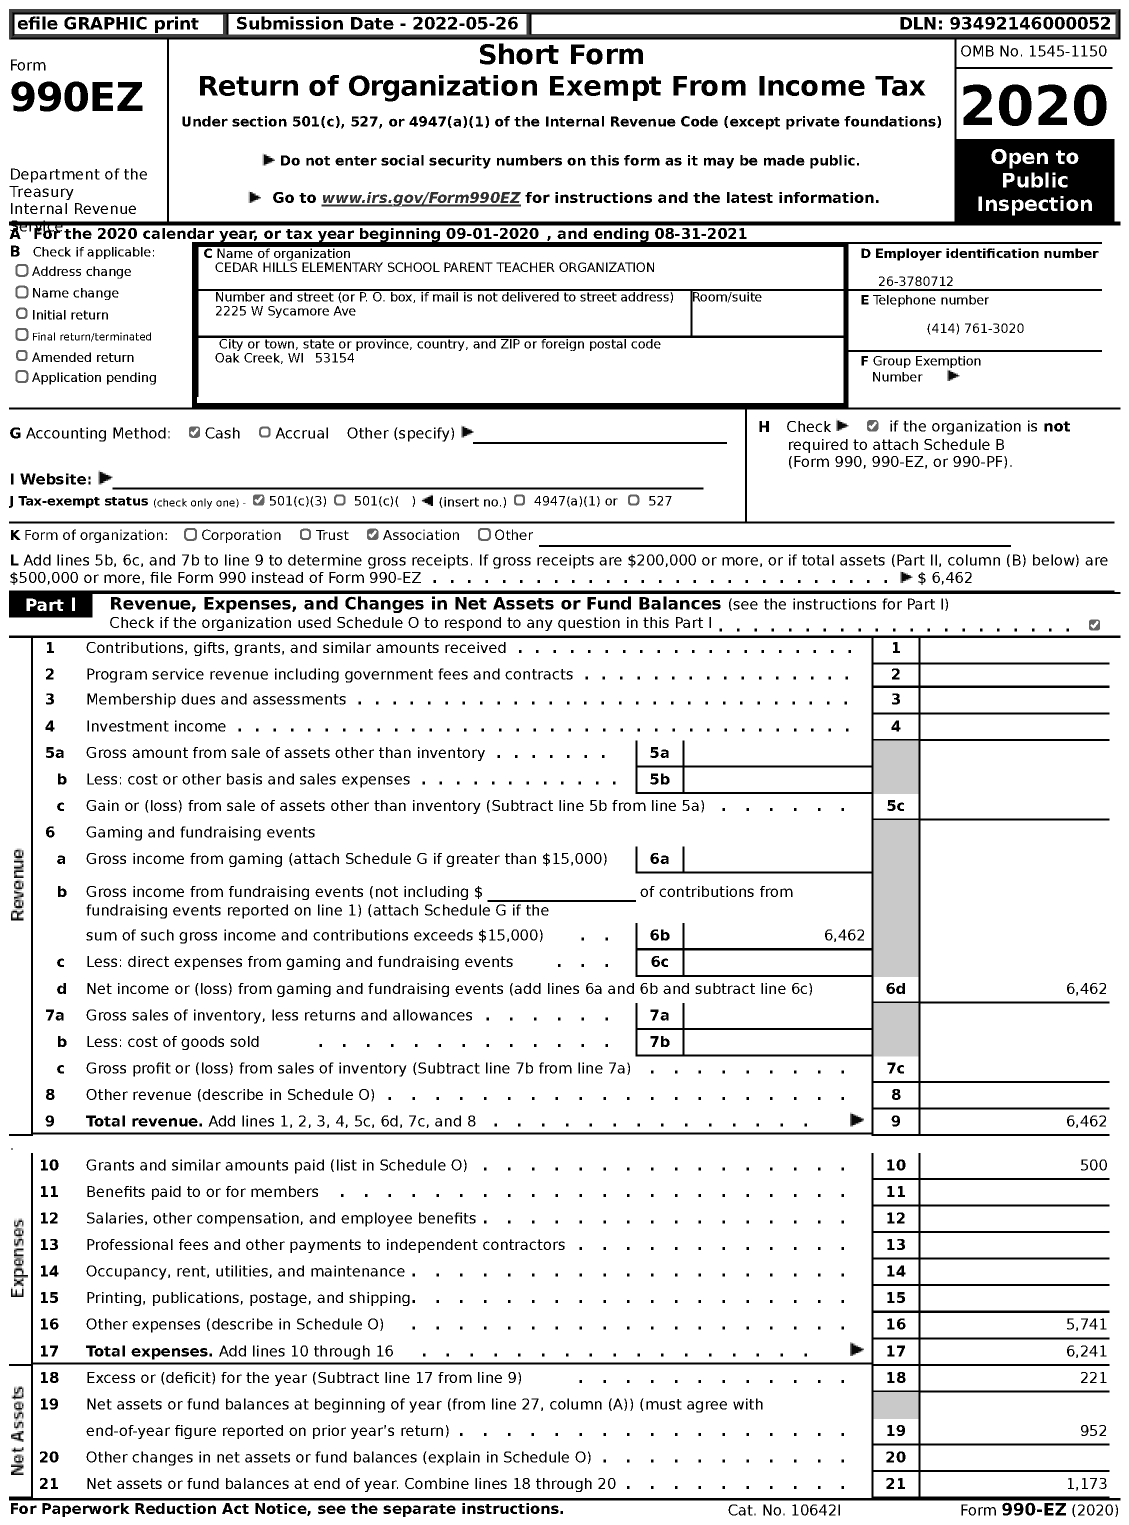 Image of first page of 2020 Form 990EZ for Cedar Hills Elementary School Parent Teacher Organization